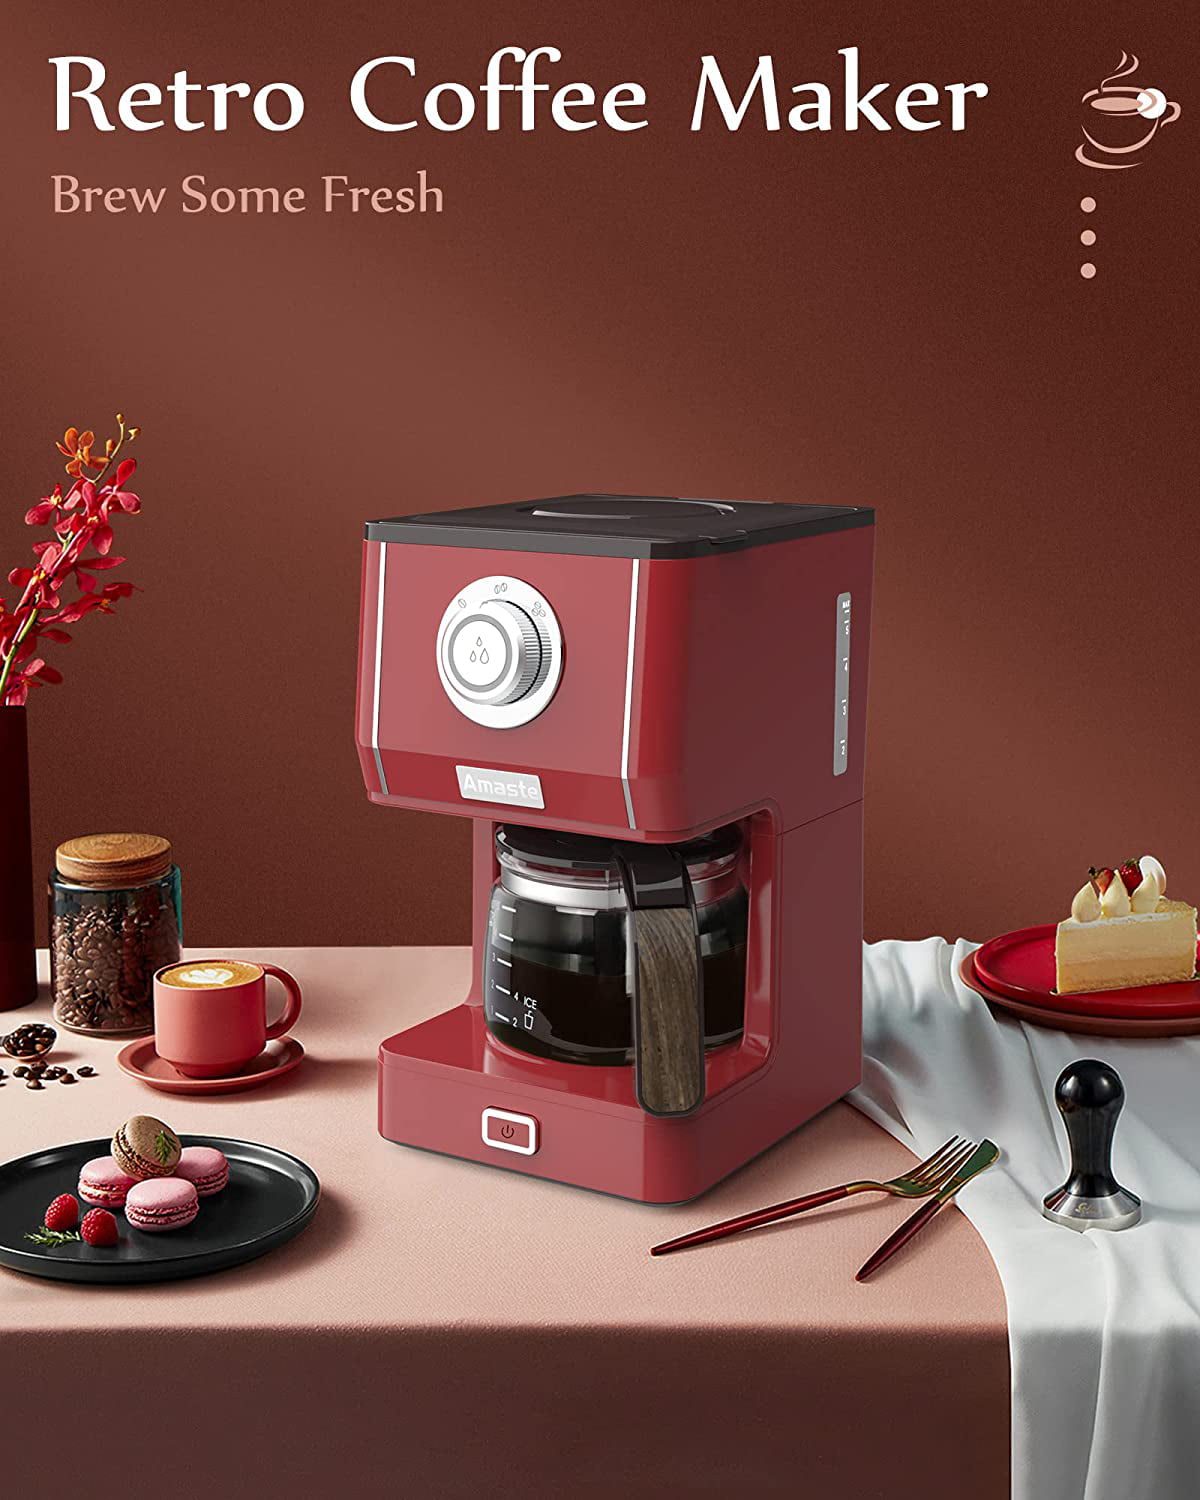 Amaste Drip Coffee Machine with 25 Oz Glass Pot, Retro Style Maker